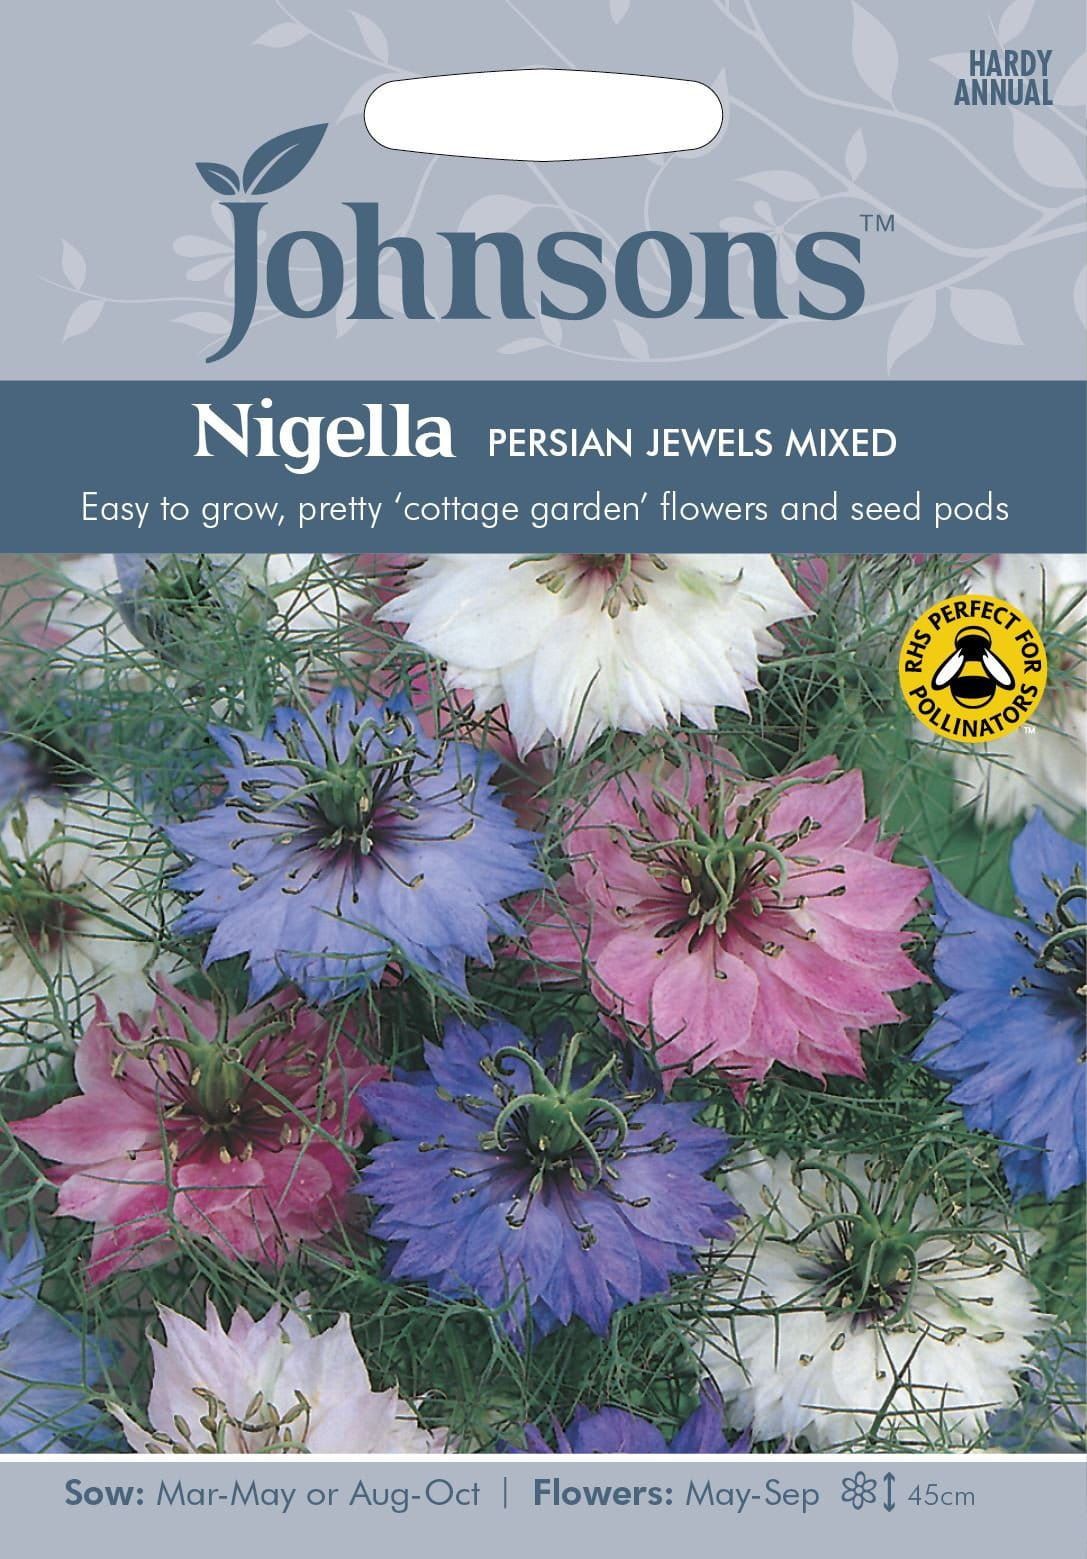 Johnsons Nigella Love in a Mist Persian Jewels Mixed 500 Seeds